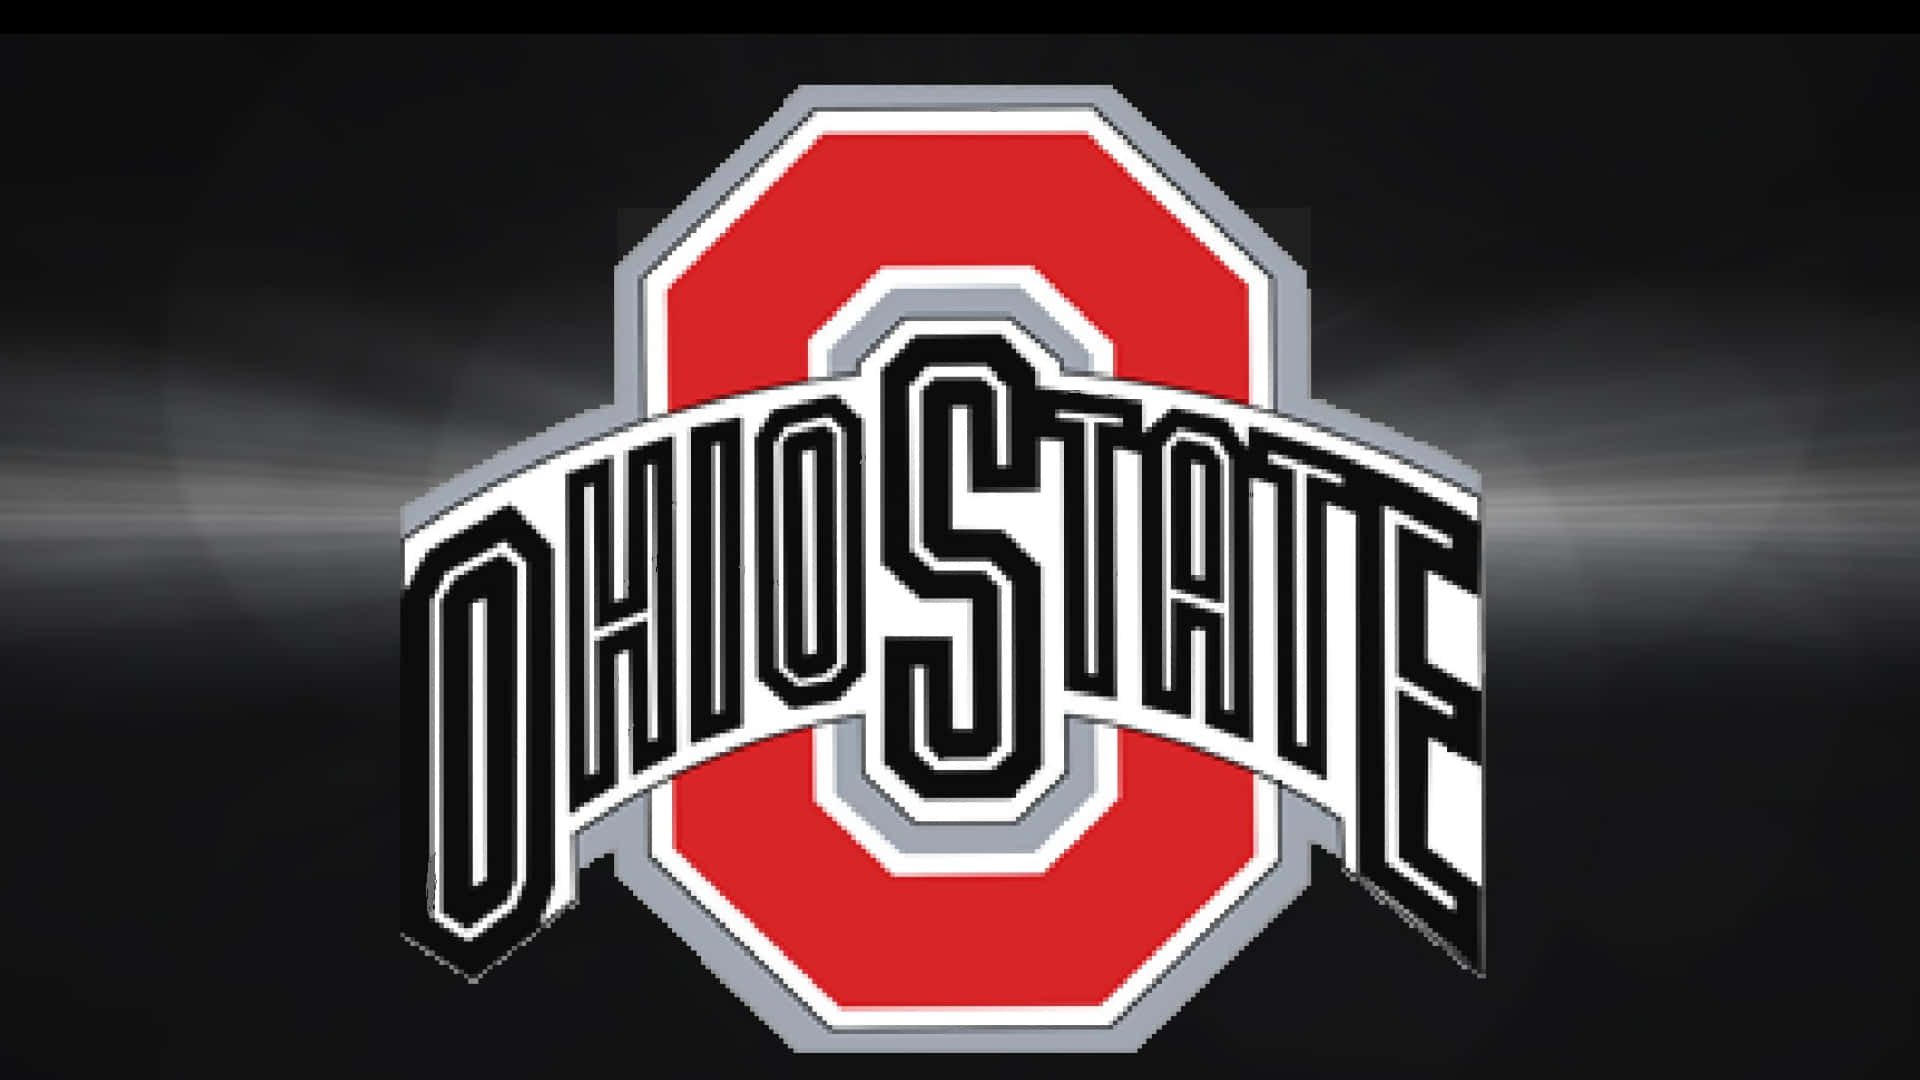 Ohio State-logo Wallpaper